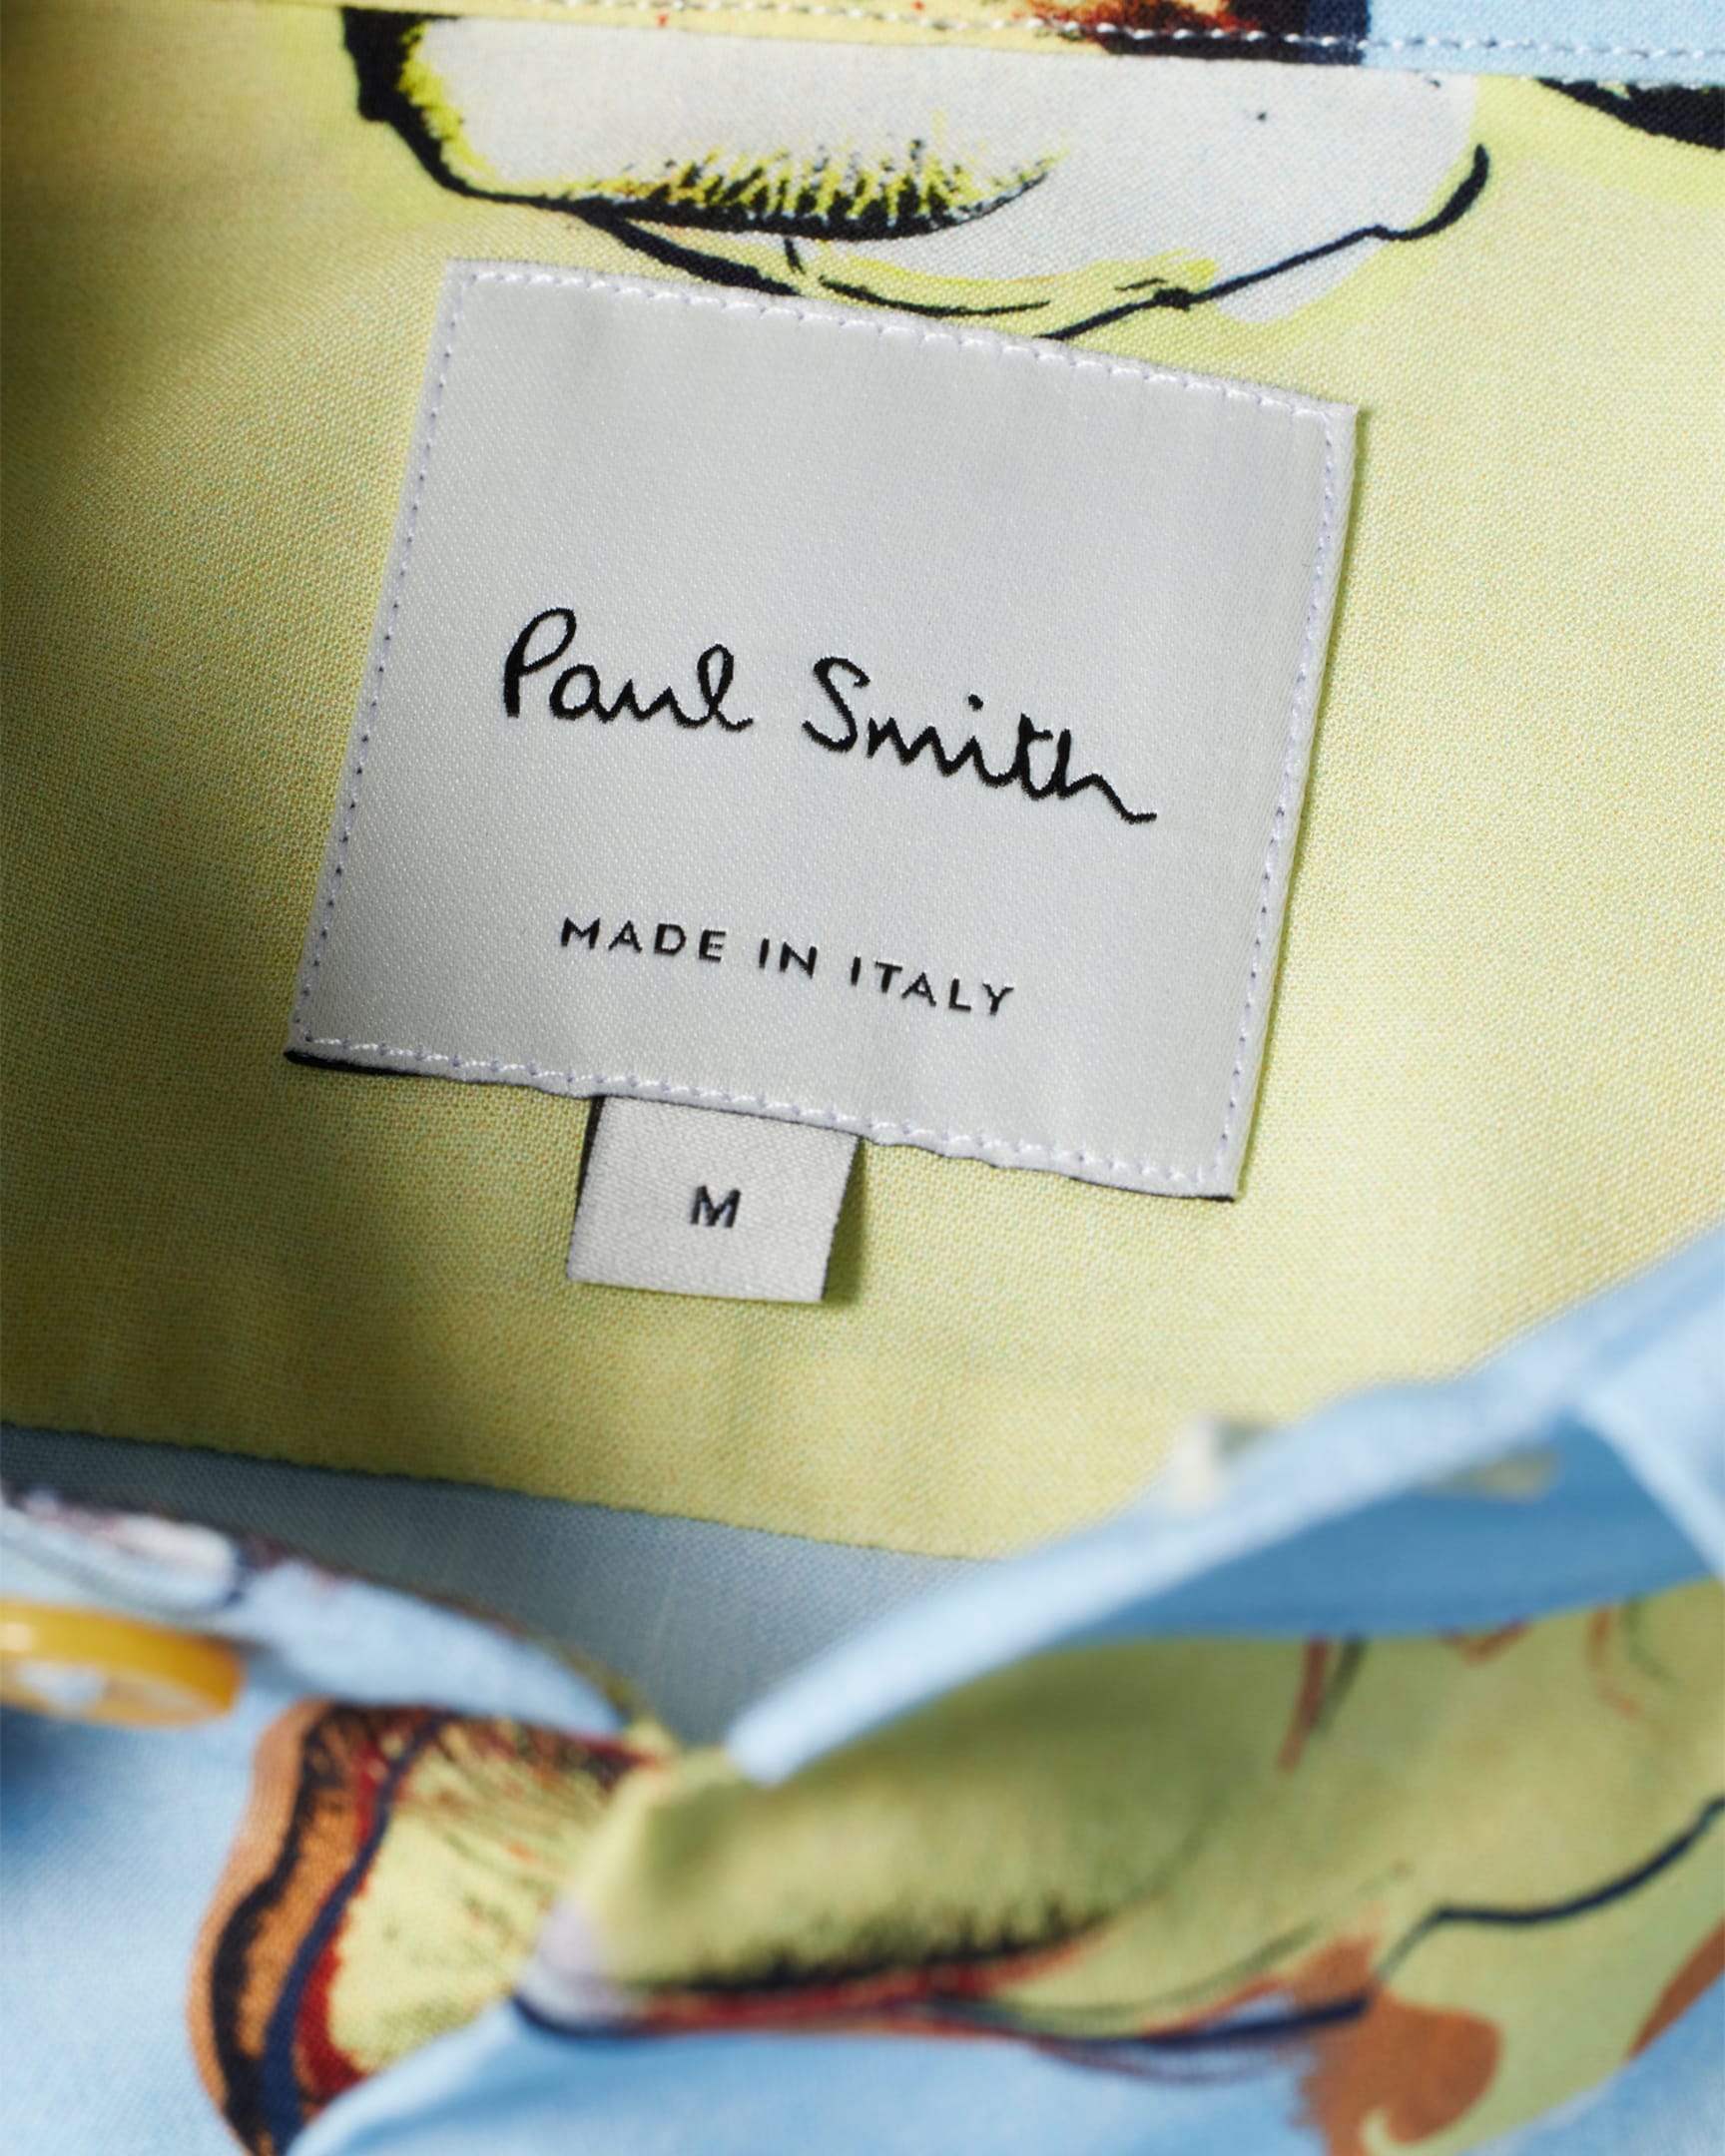 Detail View - Light Blue 'Orchid' Print Viscose-Blend Shirt Paul Smith